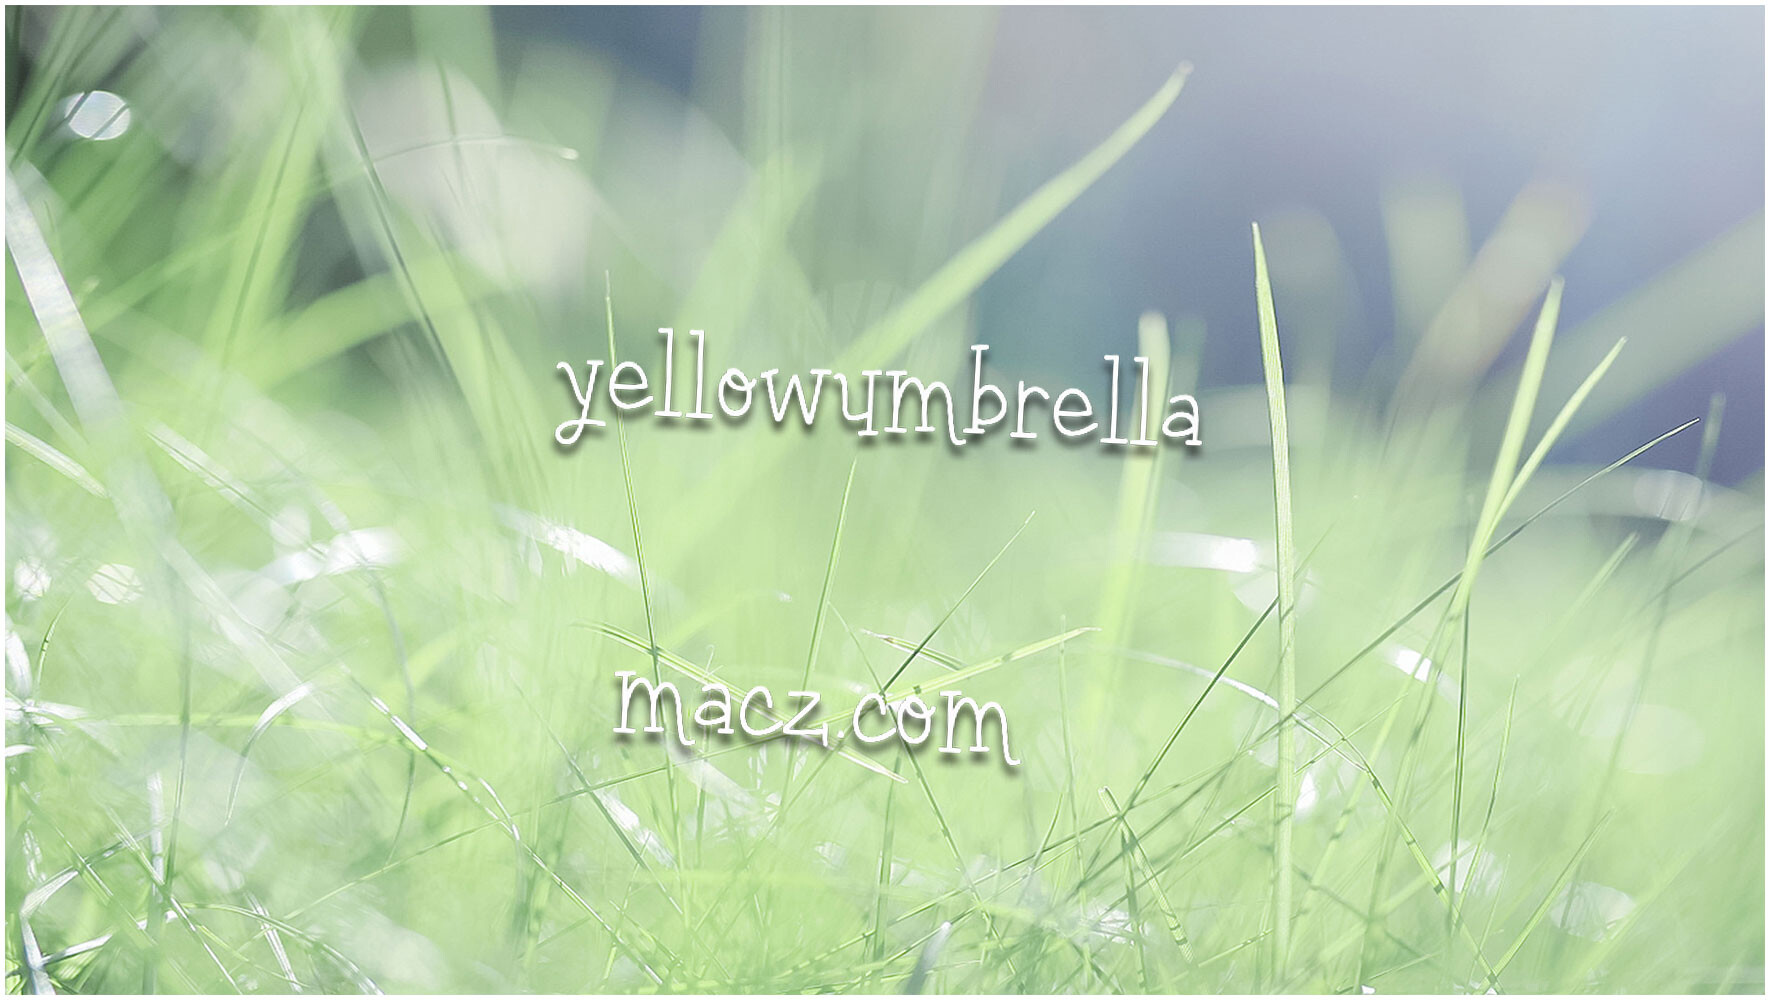 时尚艺术字体yellow umbrella